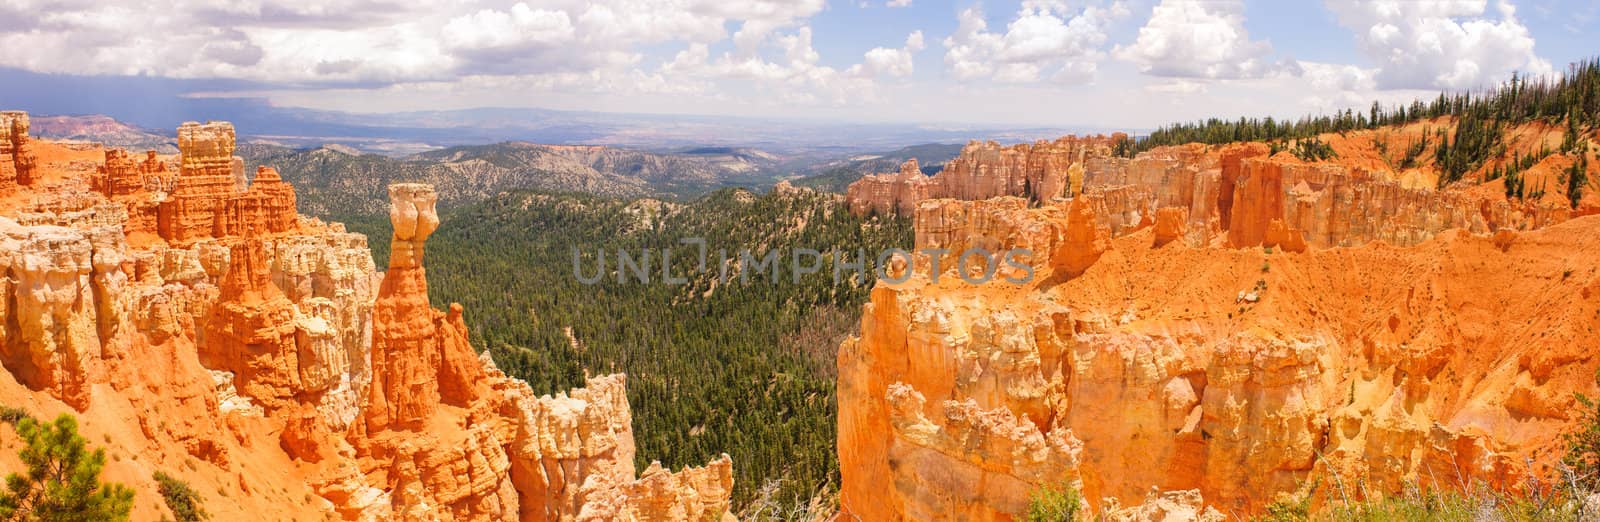 Bryce Canyon by jeffbanke